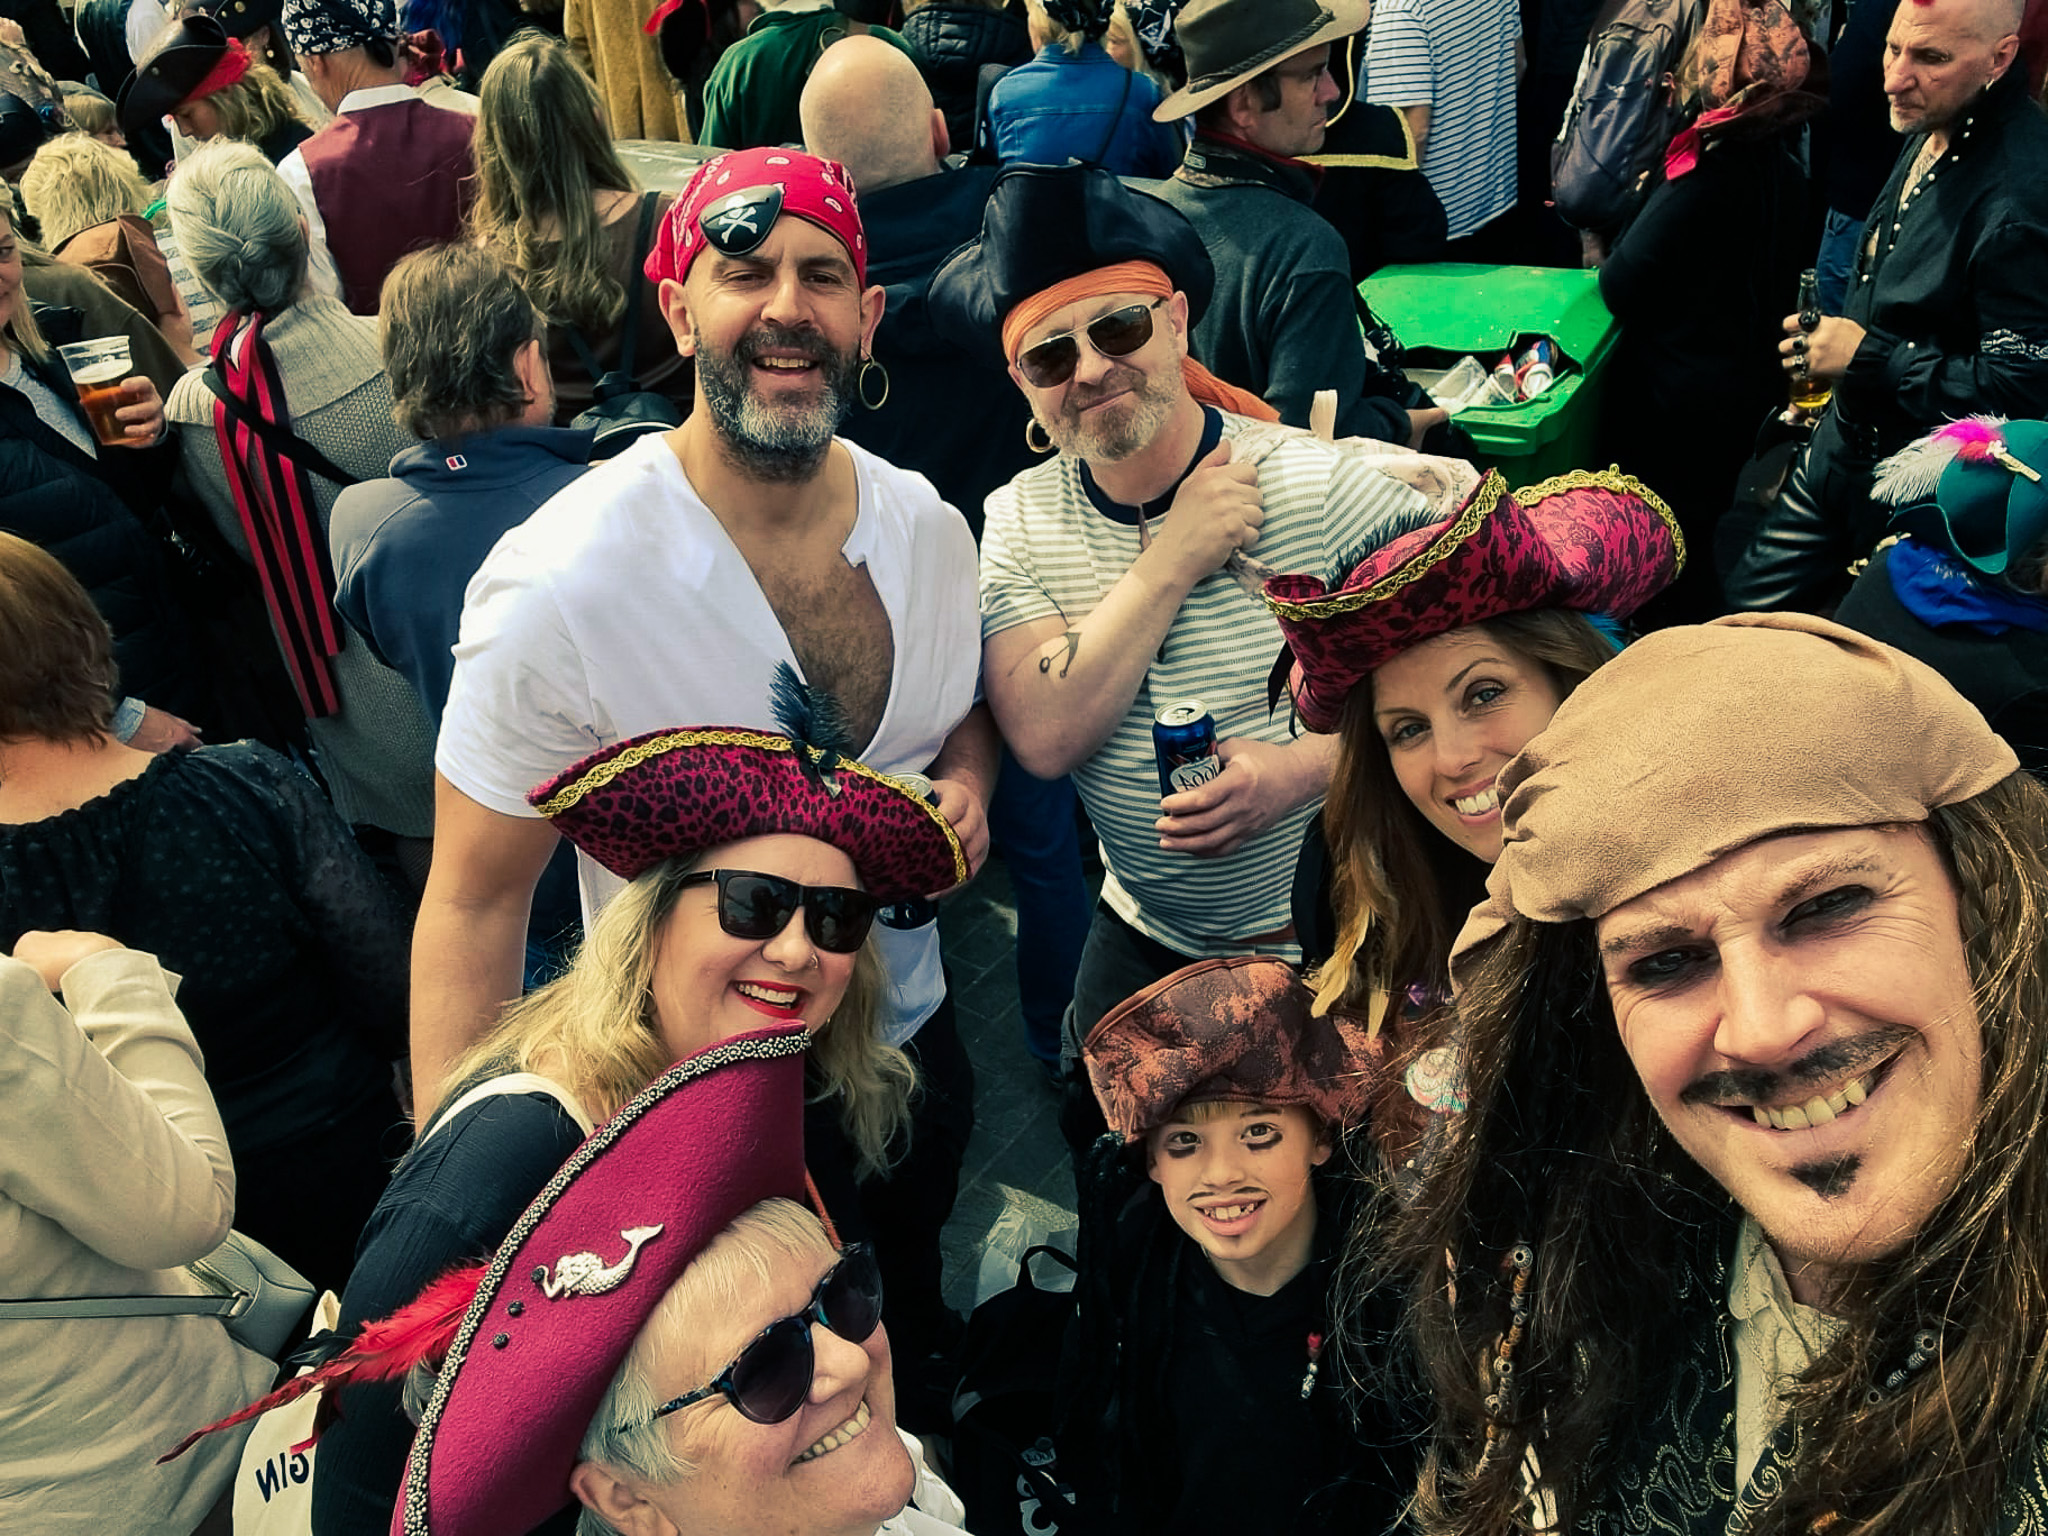 Pirates at Brixham Pirate Festival